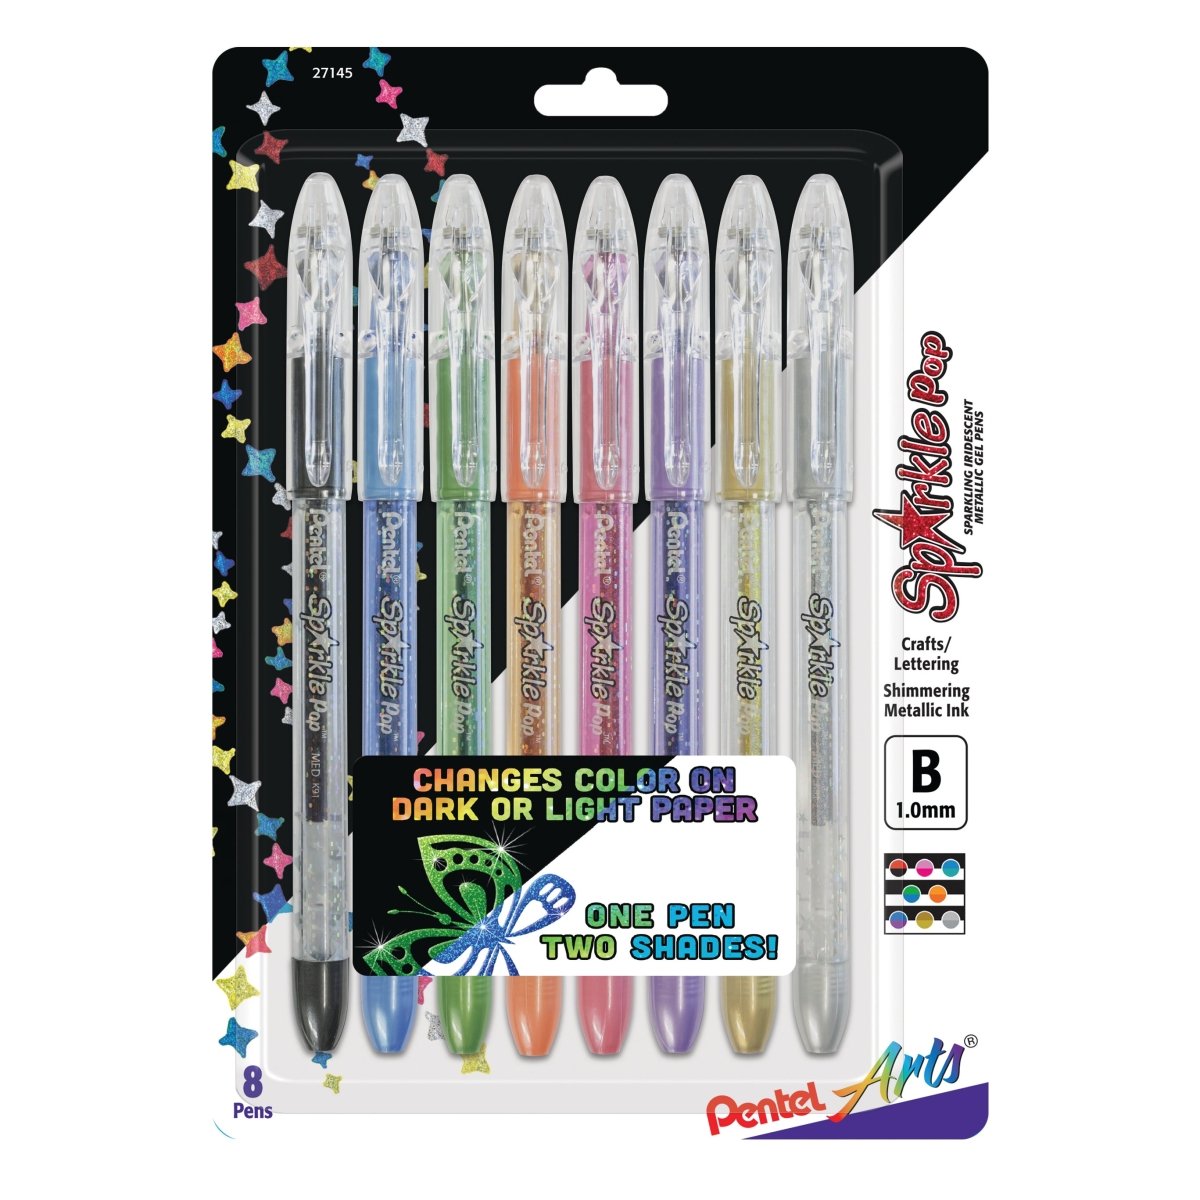 Pentel Sparkle Pop Metallic Gel Pen, (1.0mm) Bold Line, Black/Red Ink -  K91-DA: Gel Ink Rollerball Pens